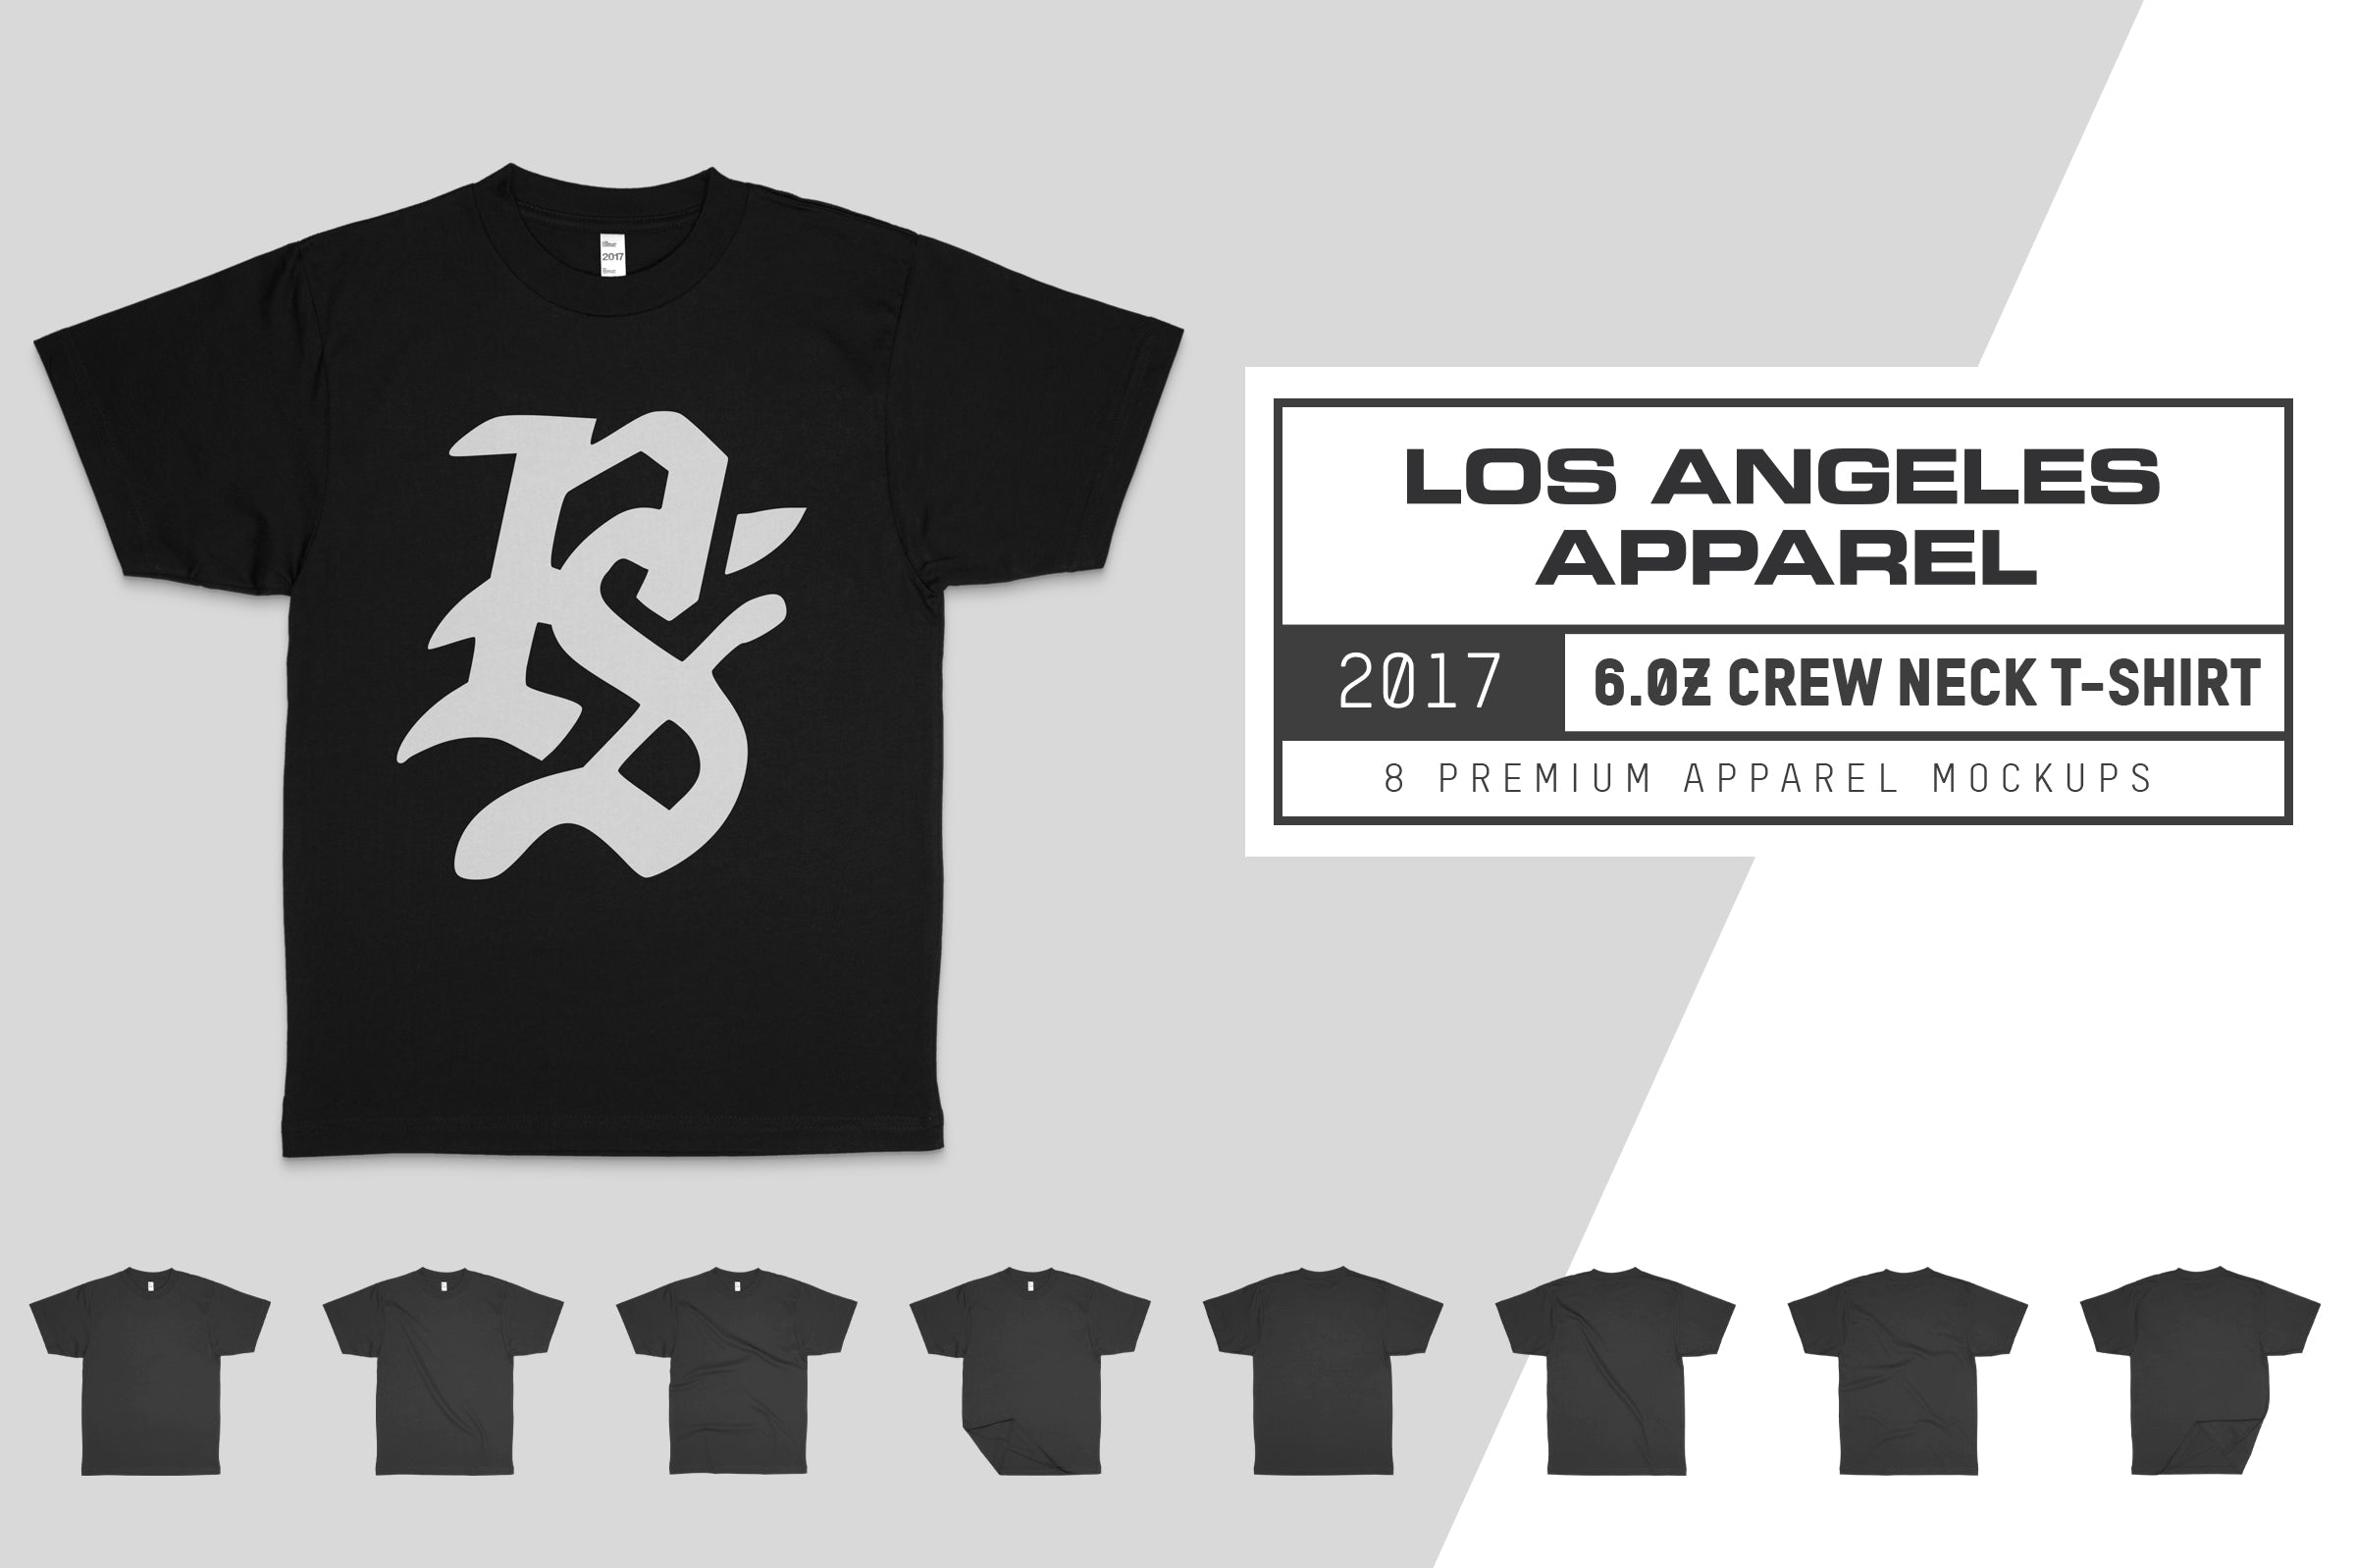 Los Angeles - Basic Black Premium Cotton T-Shirt